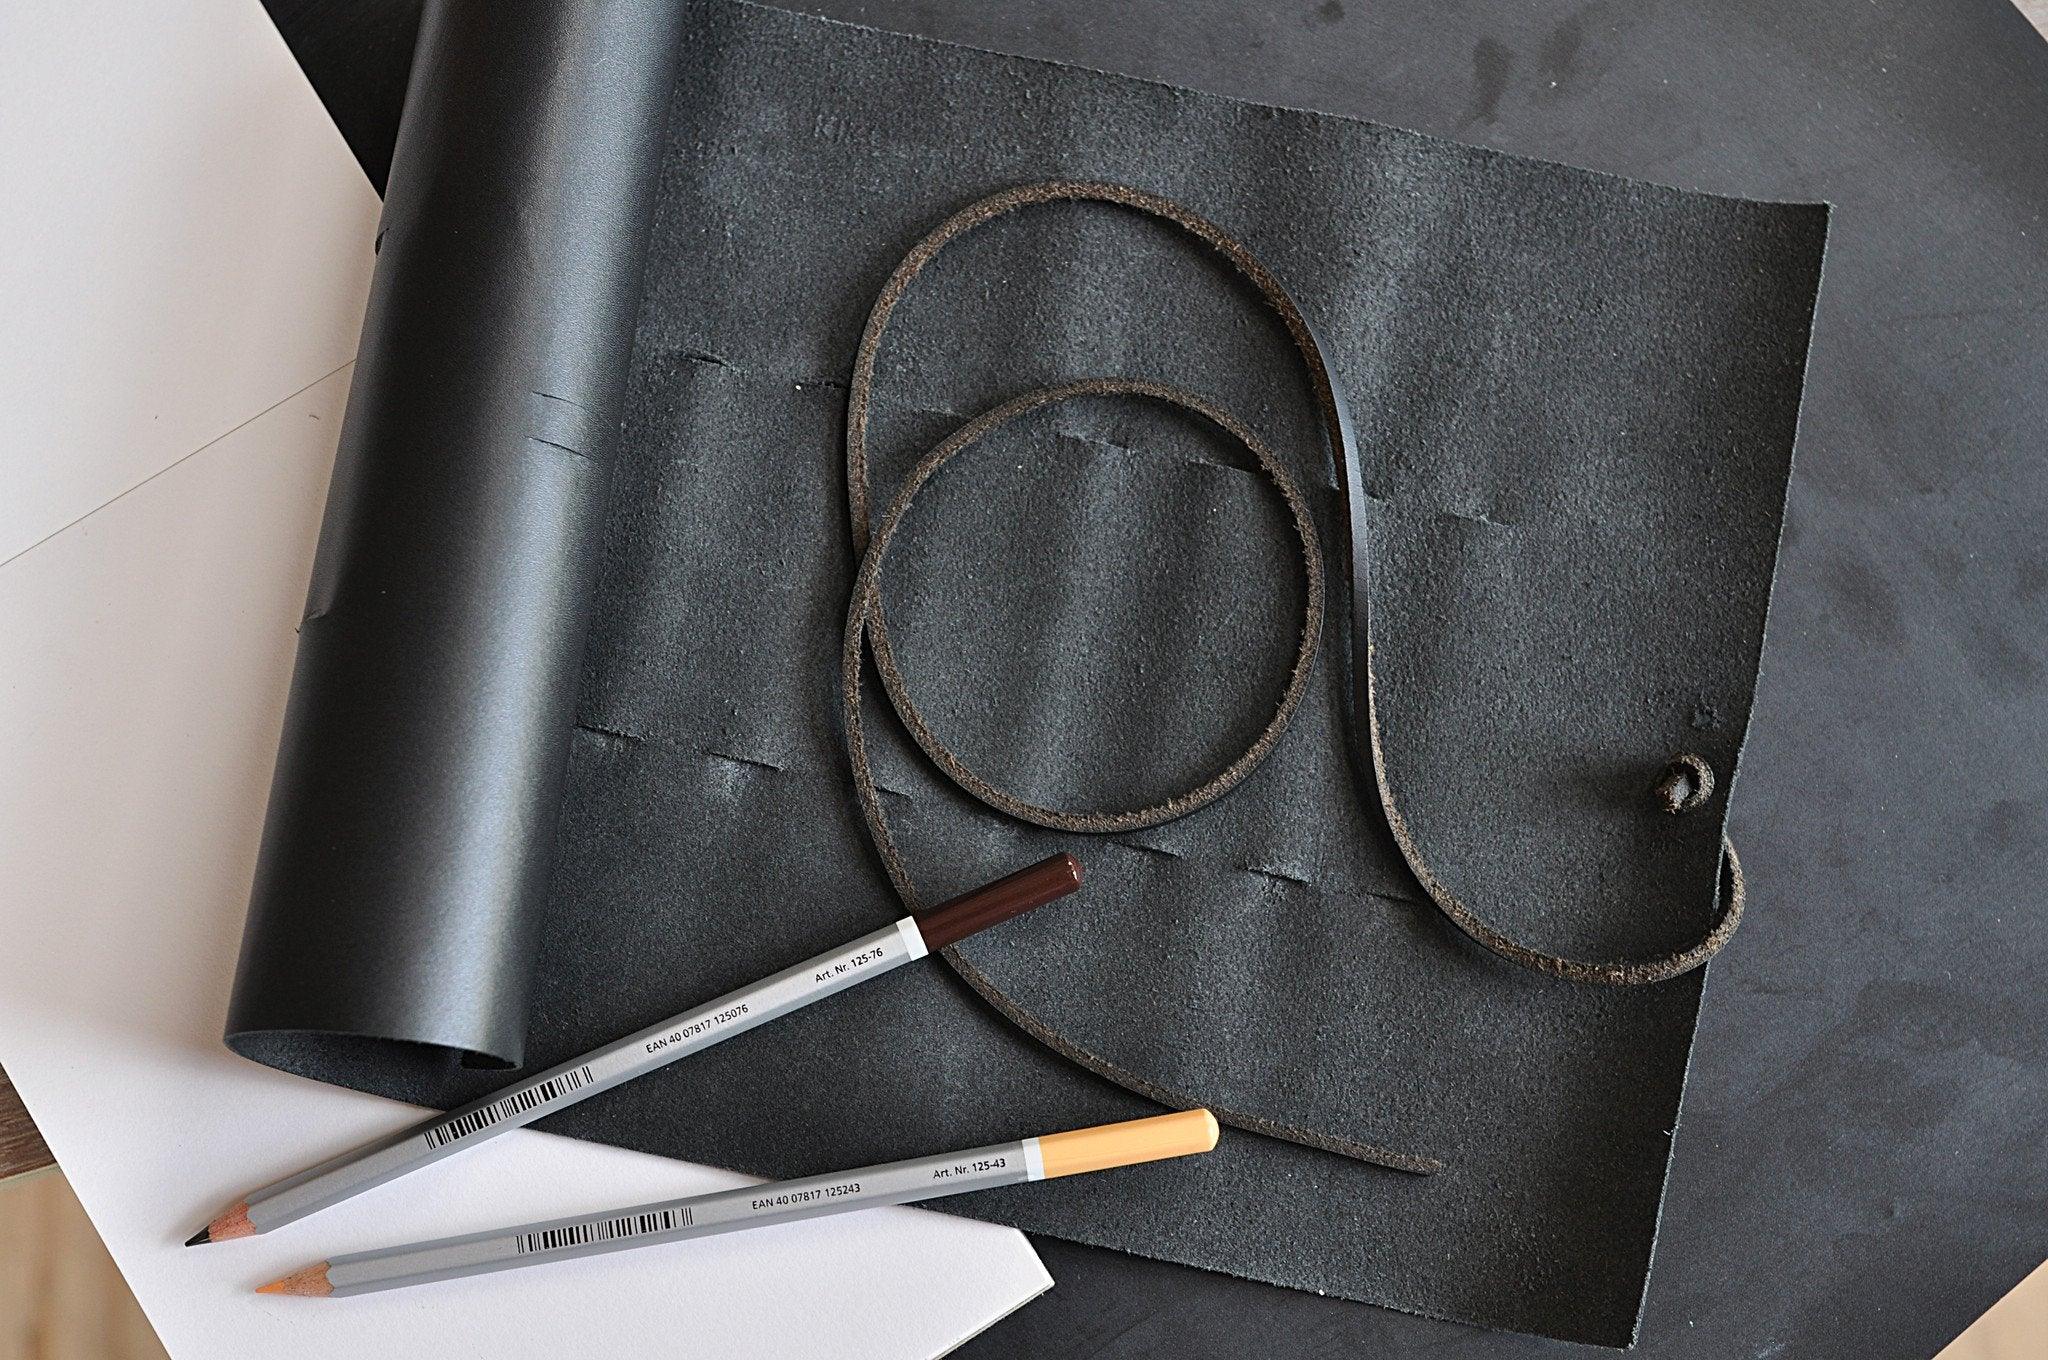 Kiko Leather Pencil Wrap - Flyclothing LLC